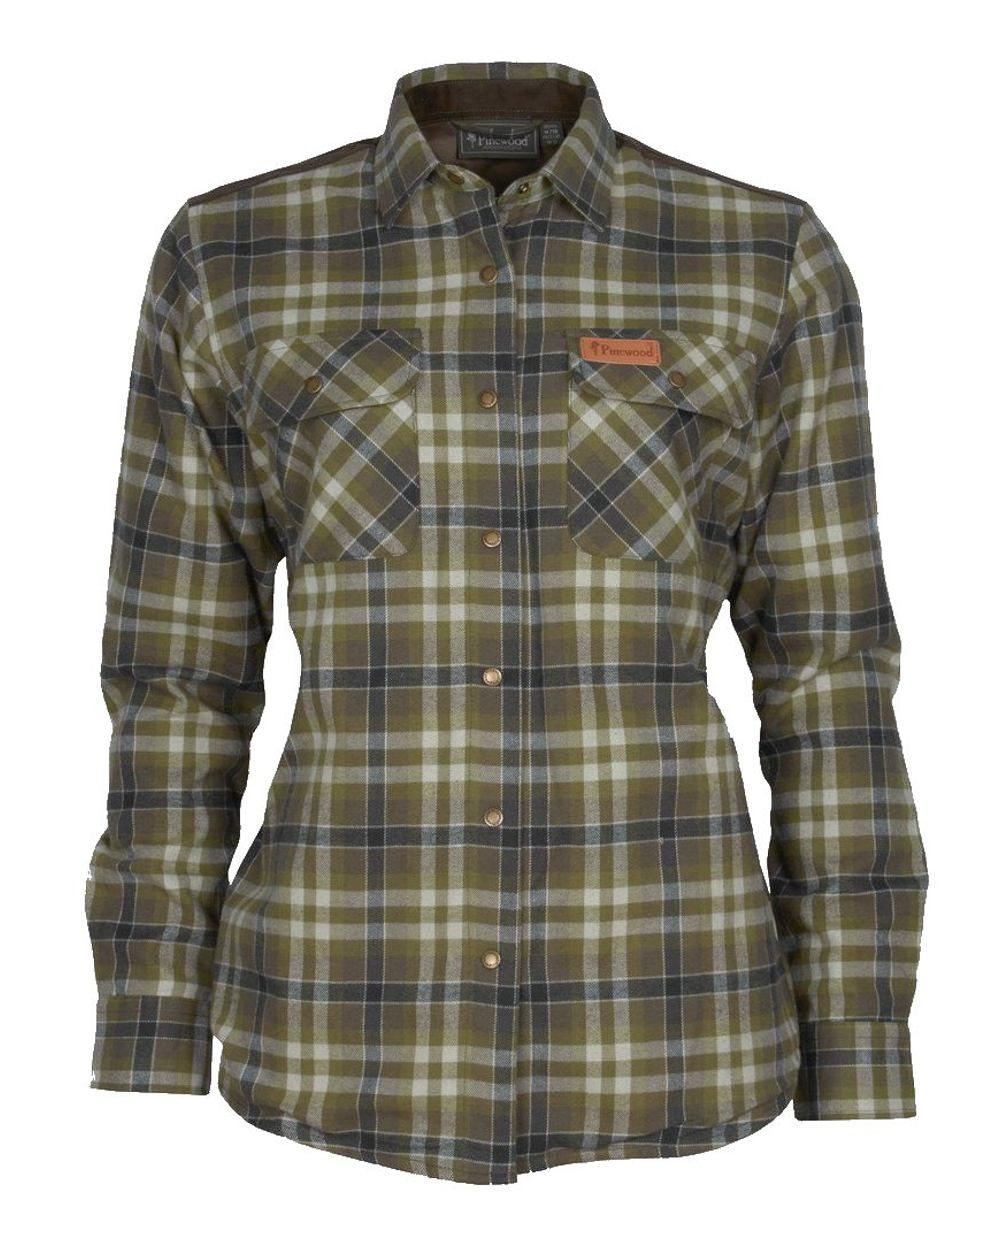 Pinewood Womens Douglas Shirt in Hunting Olive/Light Khaki 